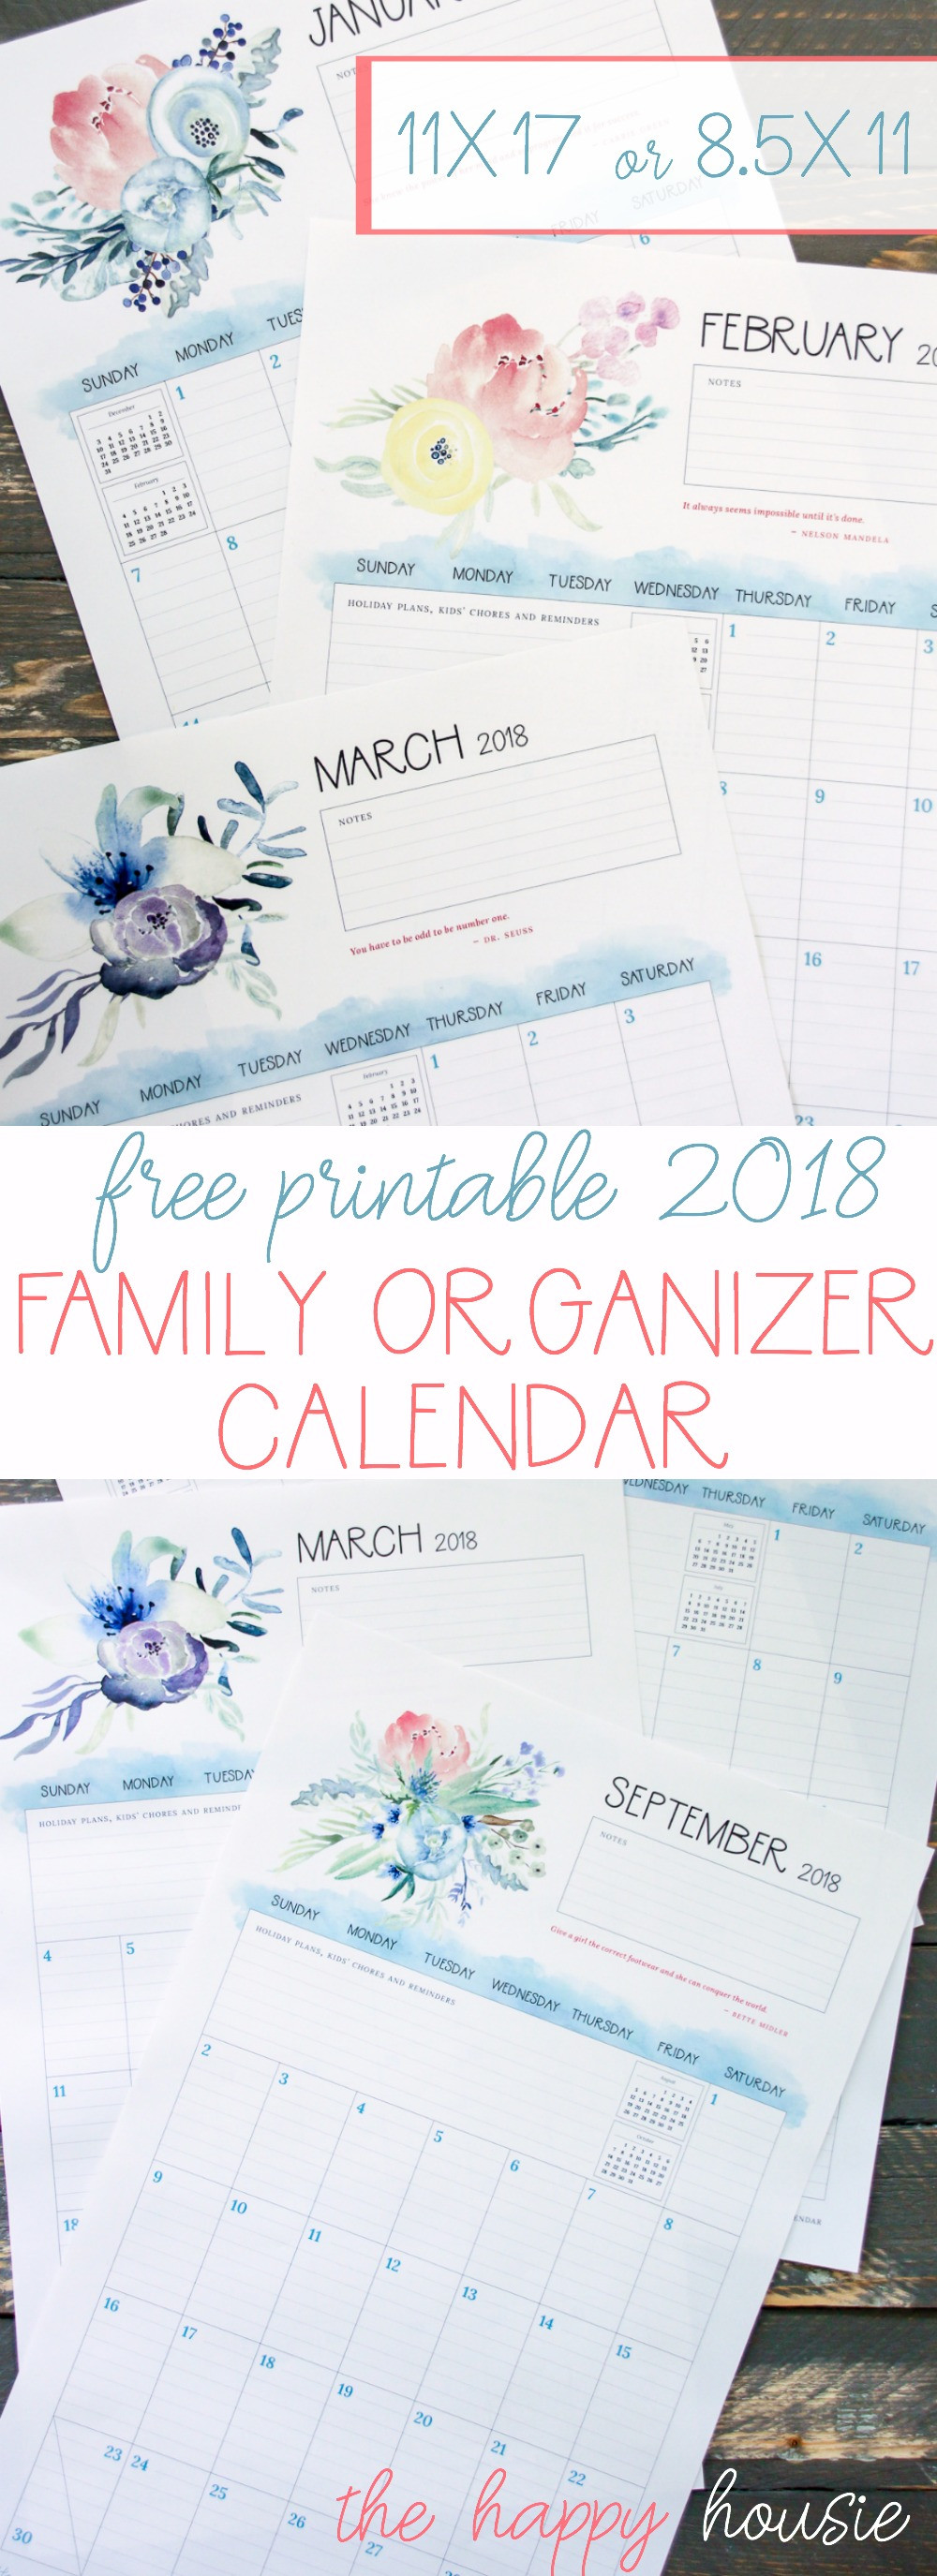 Family Planner Organizer
 Free Printable 2018 Family Organizer Calendar